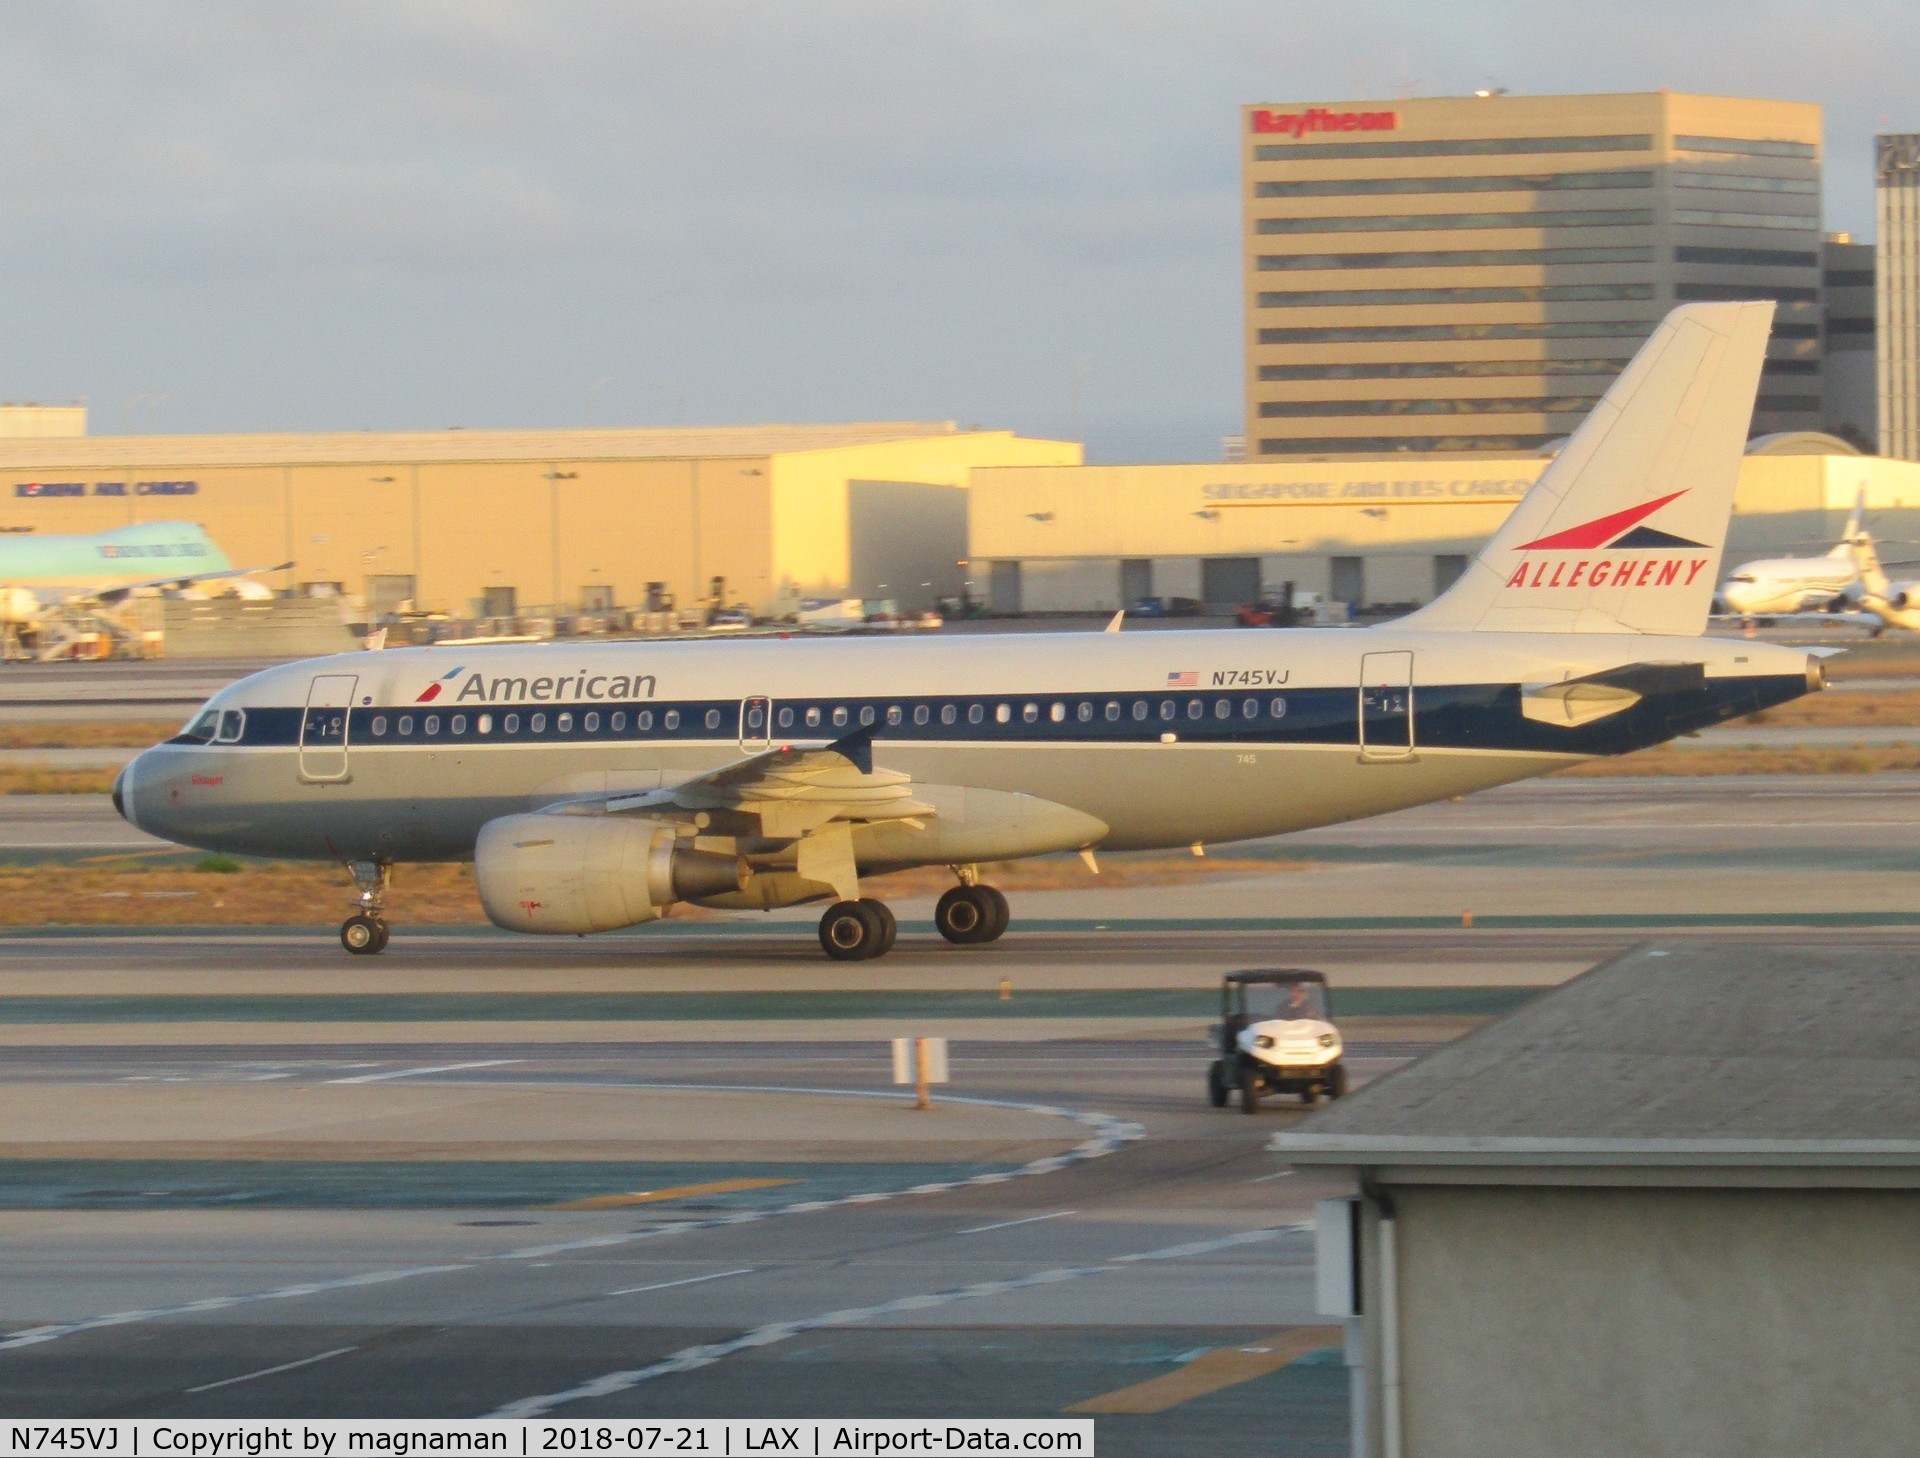 N745VJ, 2000 Airbus A319-112 C/N 1289, leaving LA at dusk - nice retro scheme